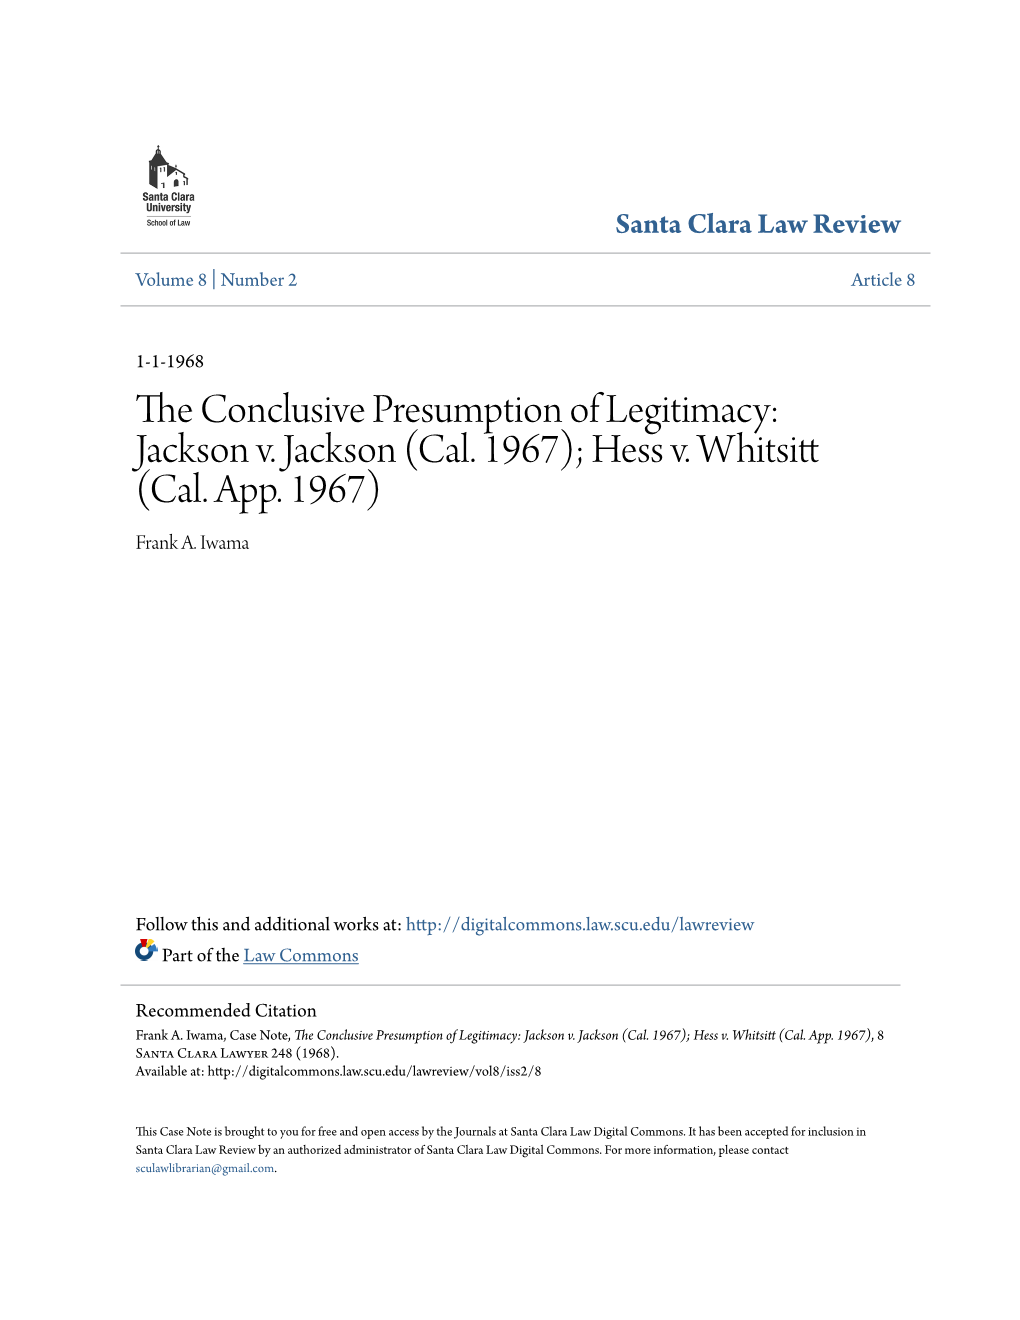 The Conclusive Presumption of Legitimacy: Jackson V